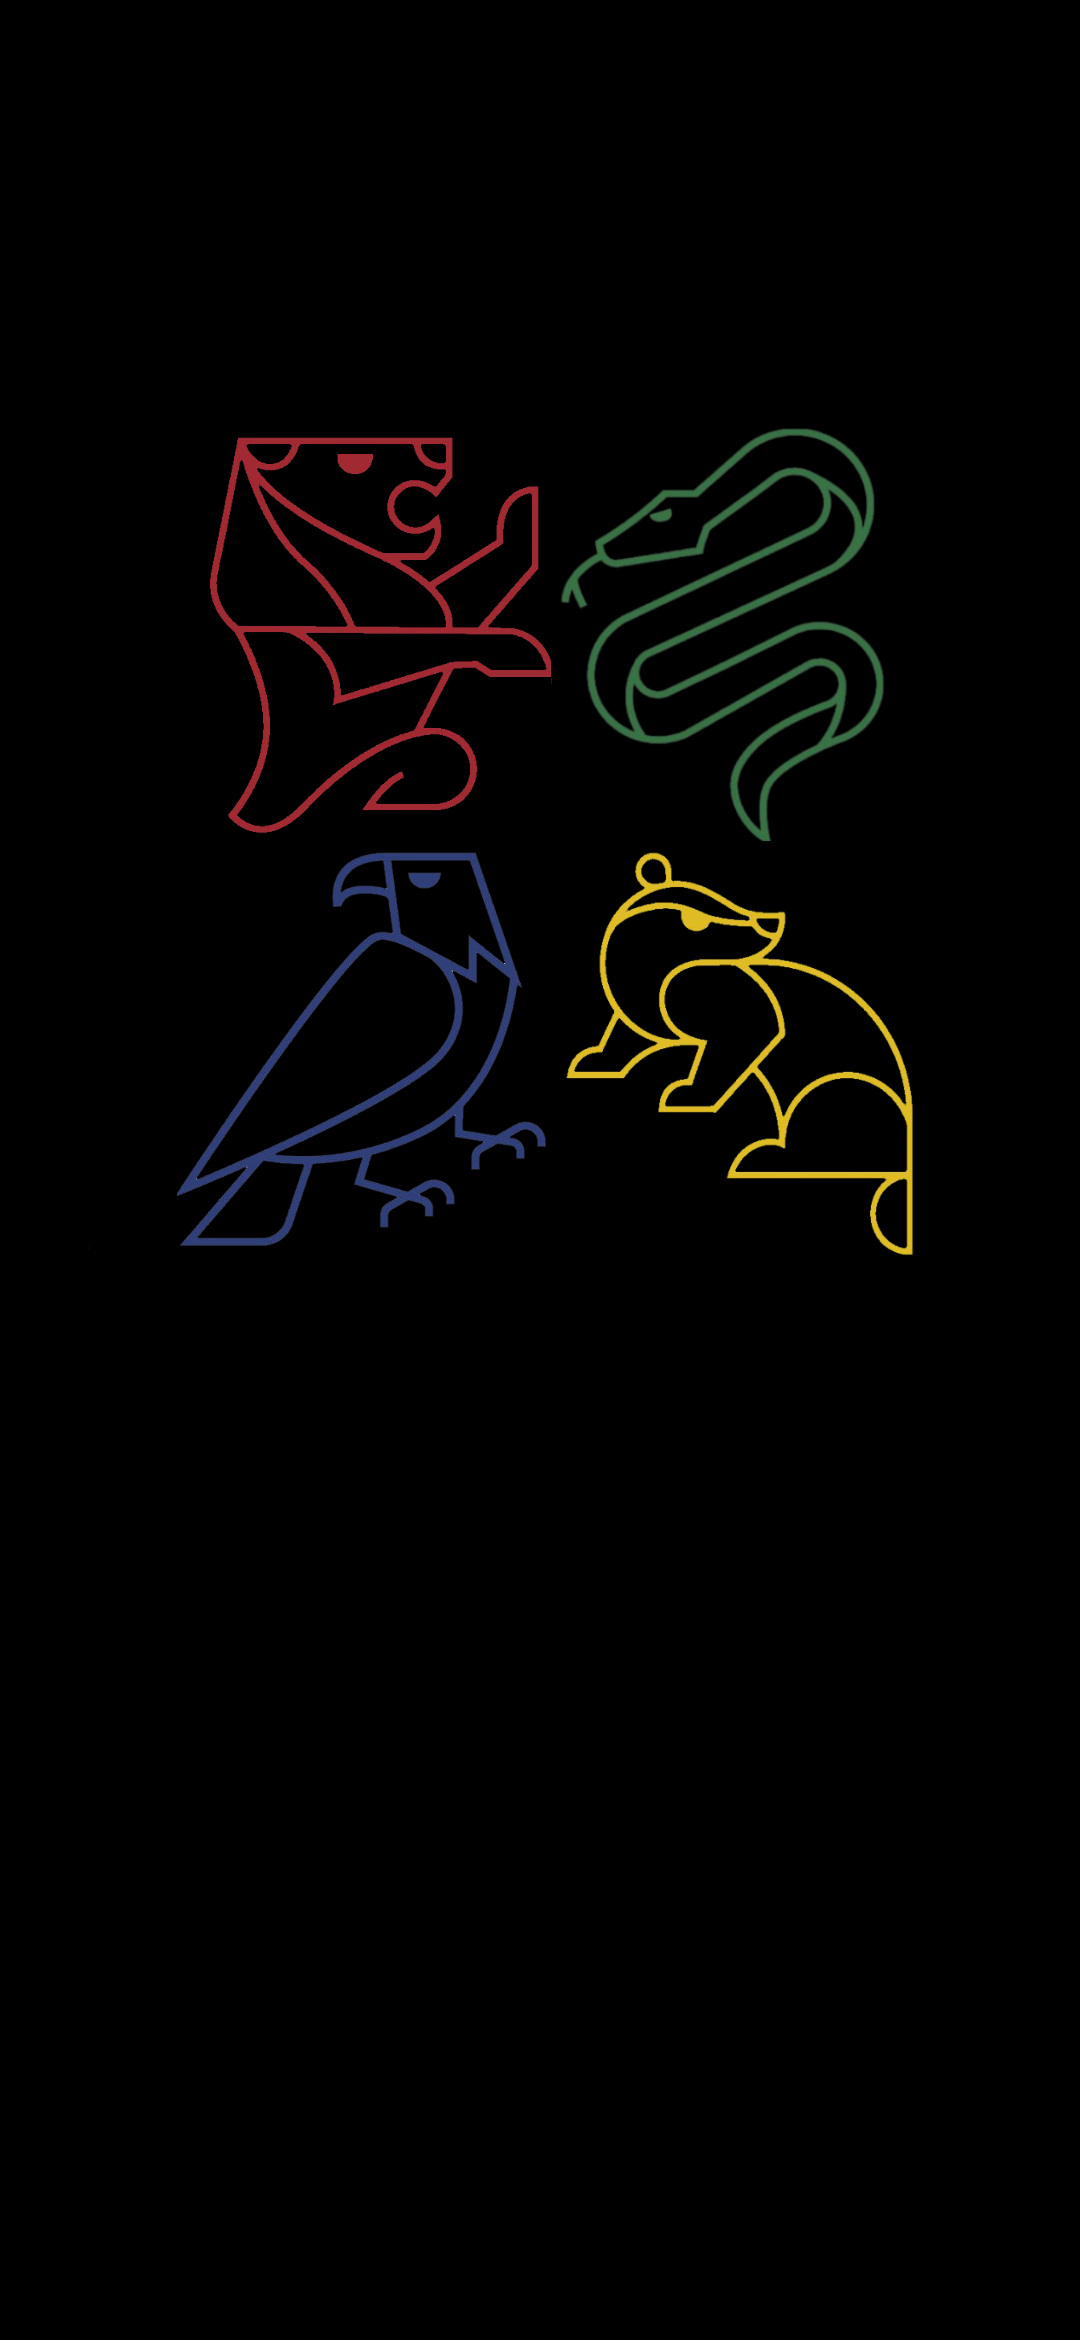 Hogwarts minimalistic logo wallpaper